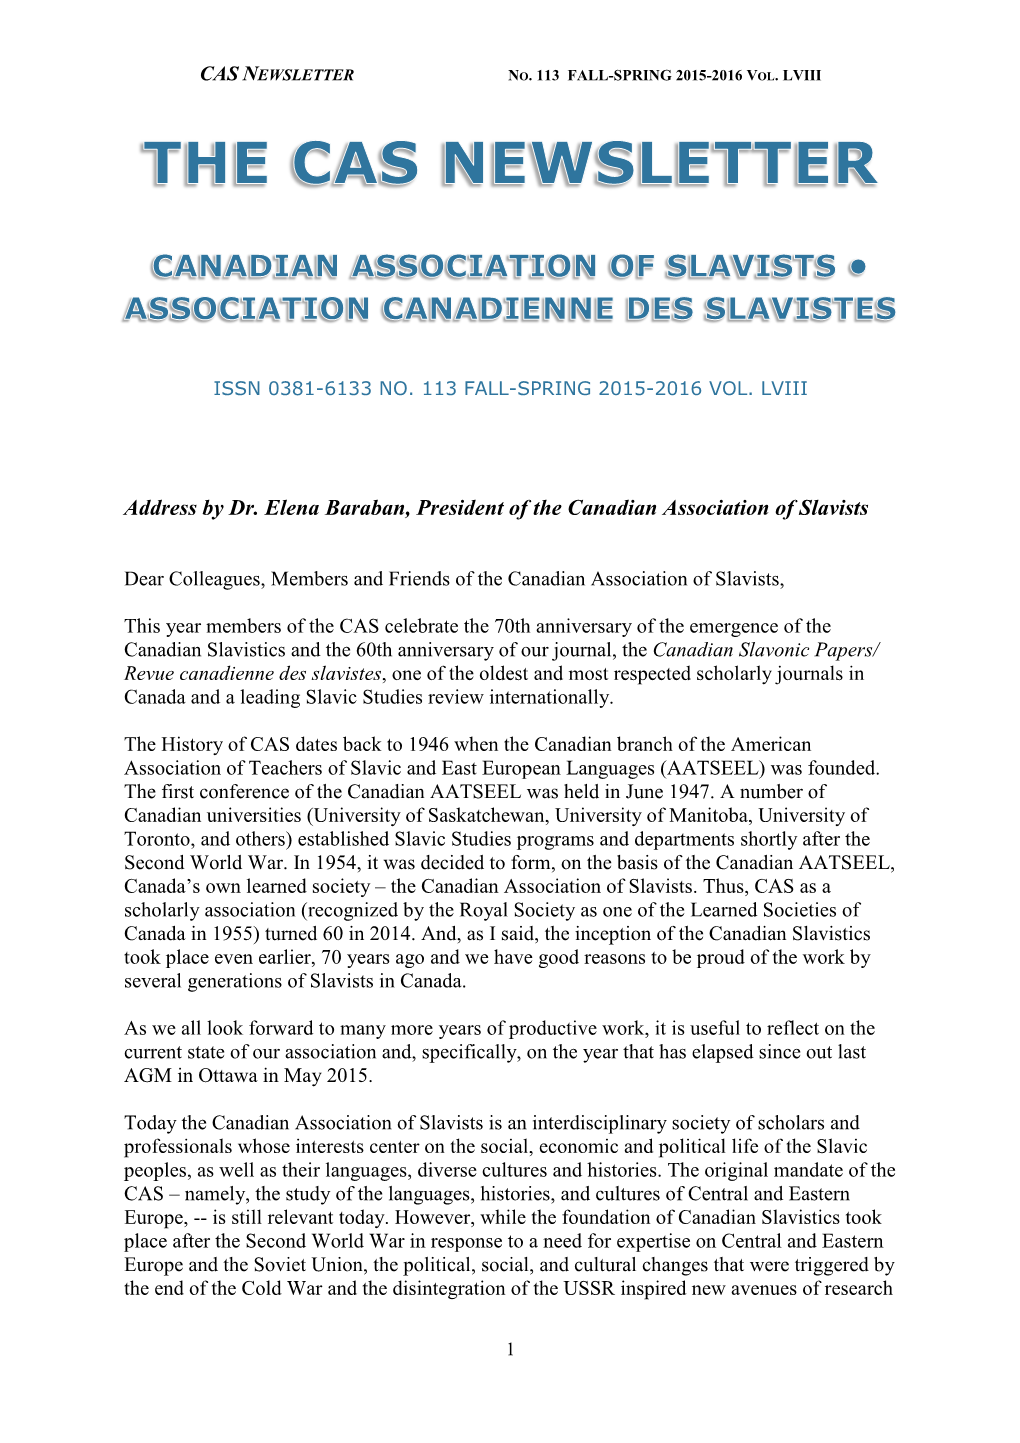 Address by Dr. Elena Baraban, President of the Canadian Association of Slavists